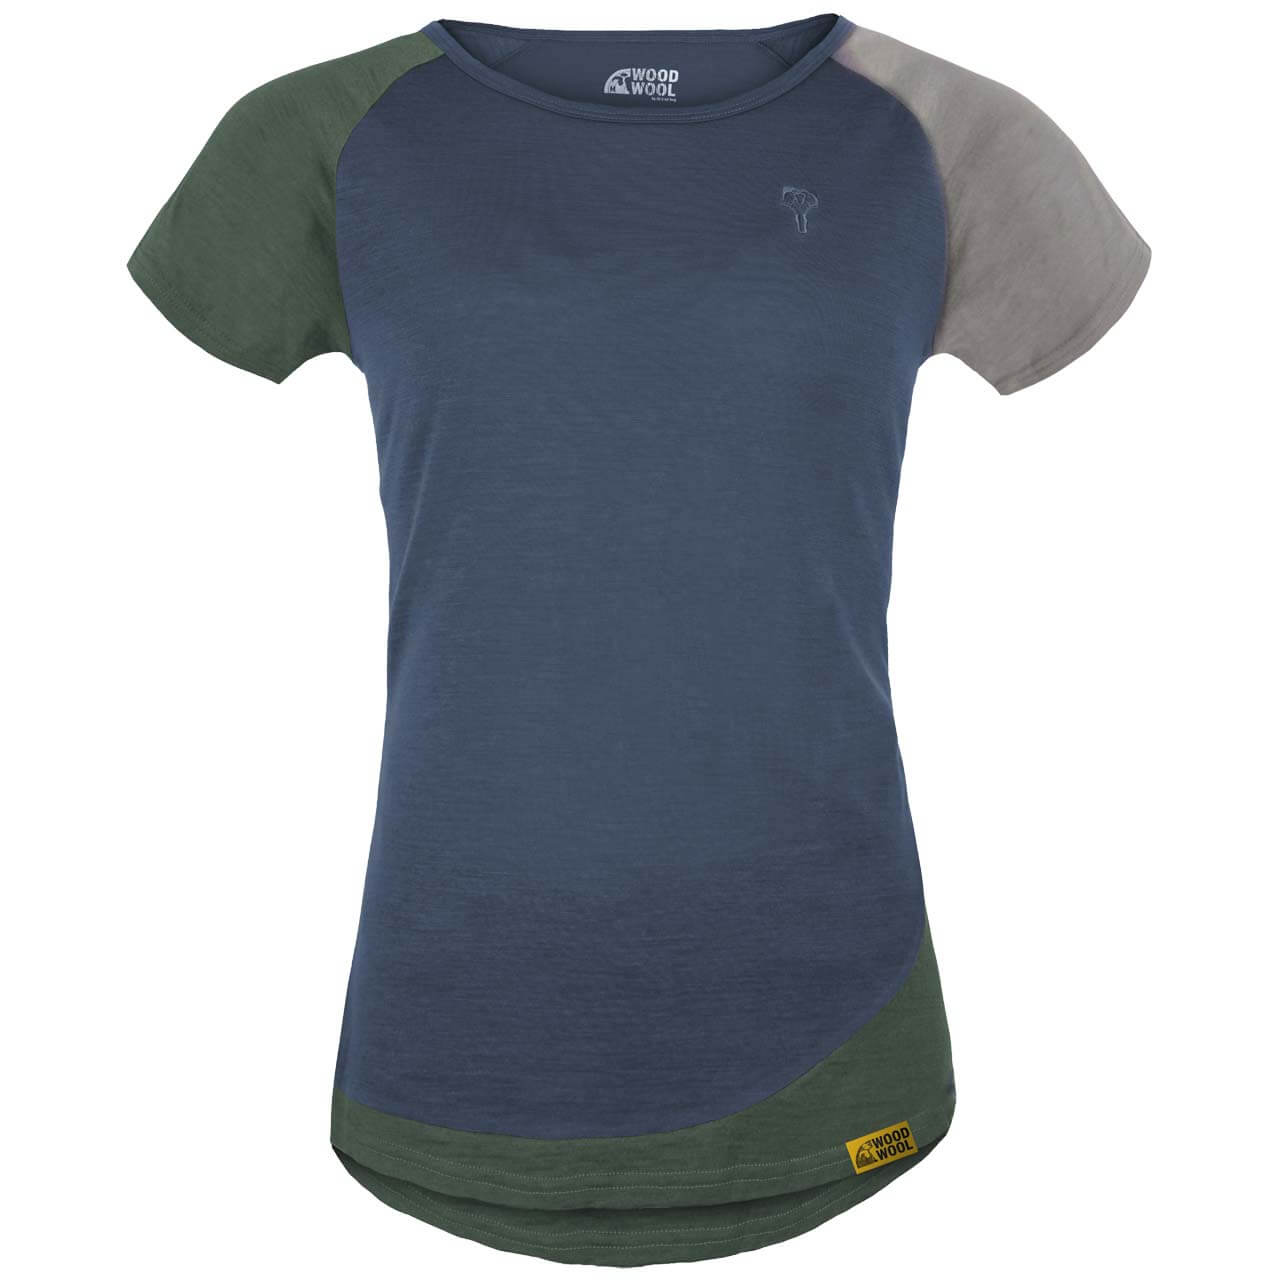 Grüezi Bag WoodWool Janeway T-Shirt - Ocean Cavern, XS von Grüezi Bag